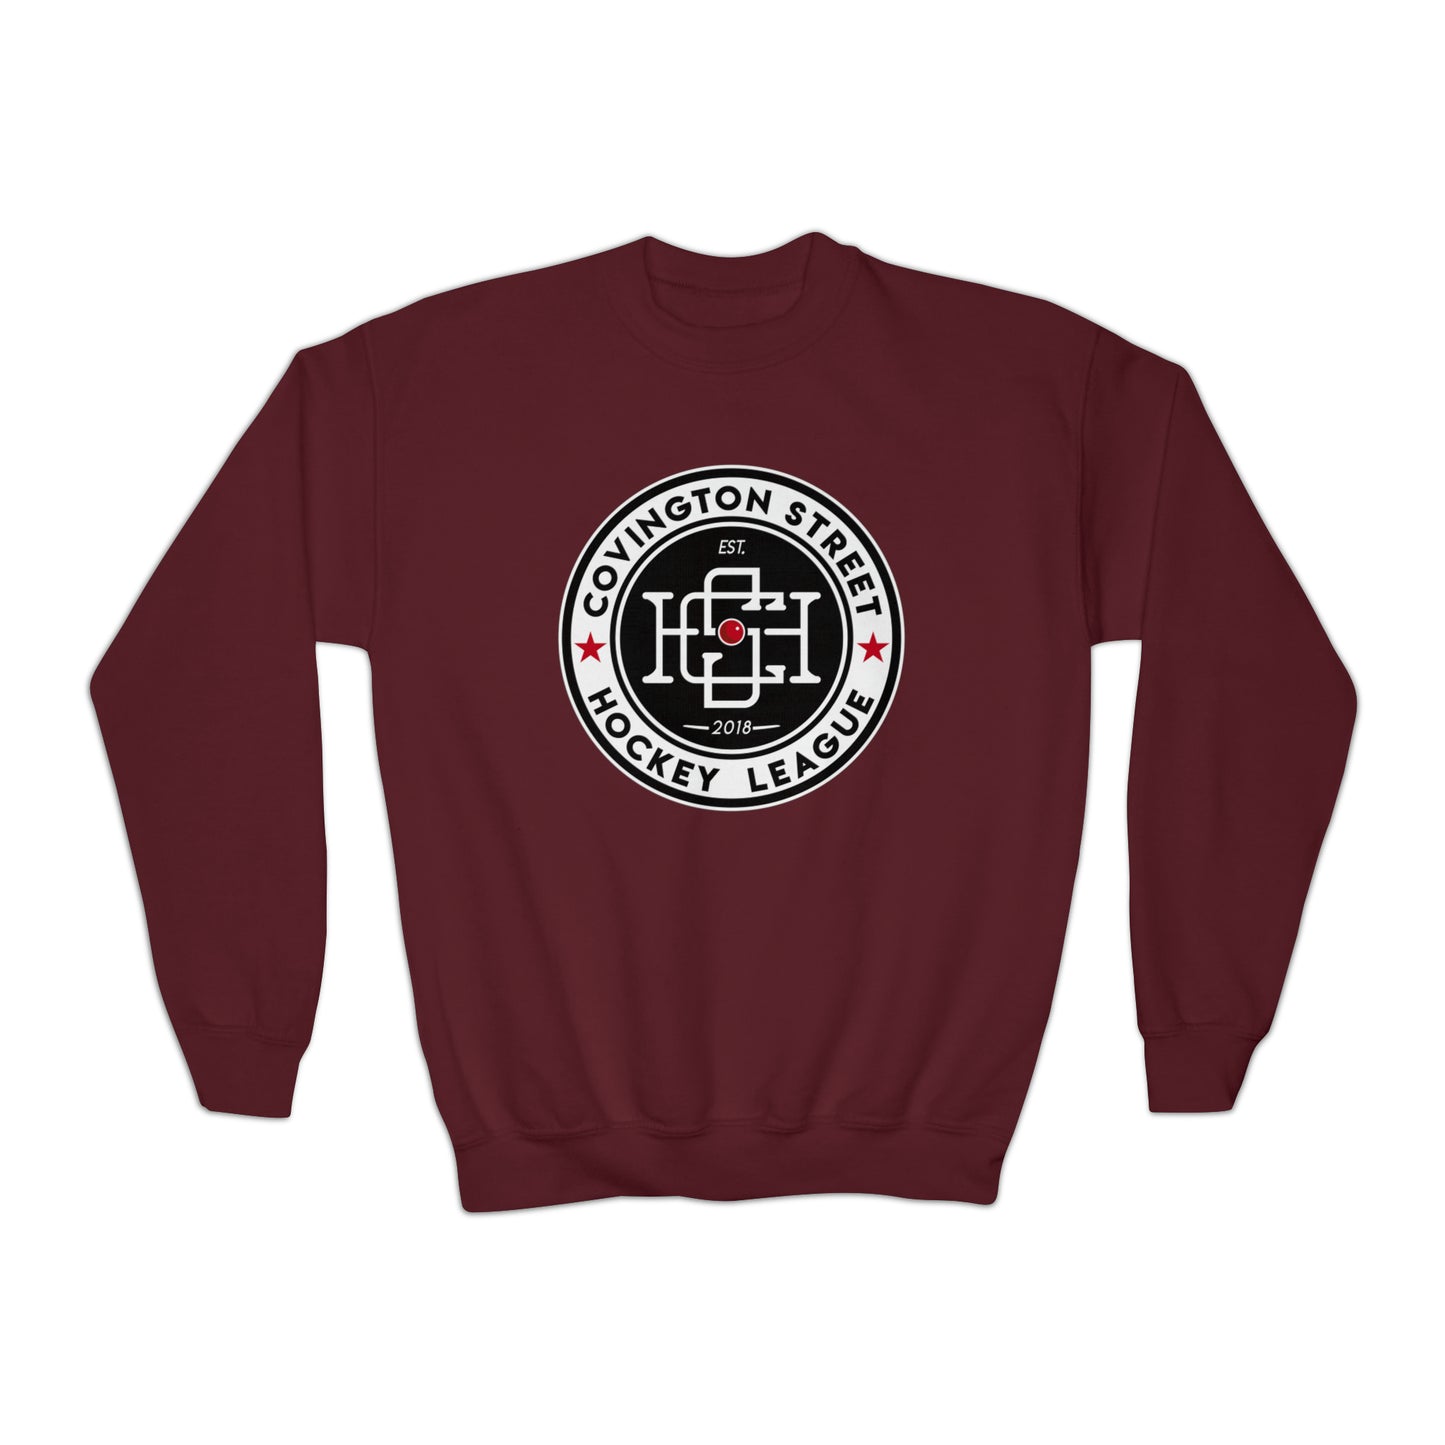 Youth Crewneck Sweatshirt | CSHL Logo